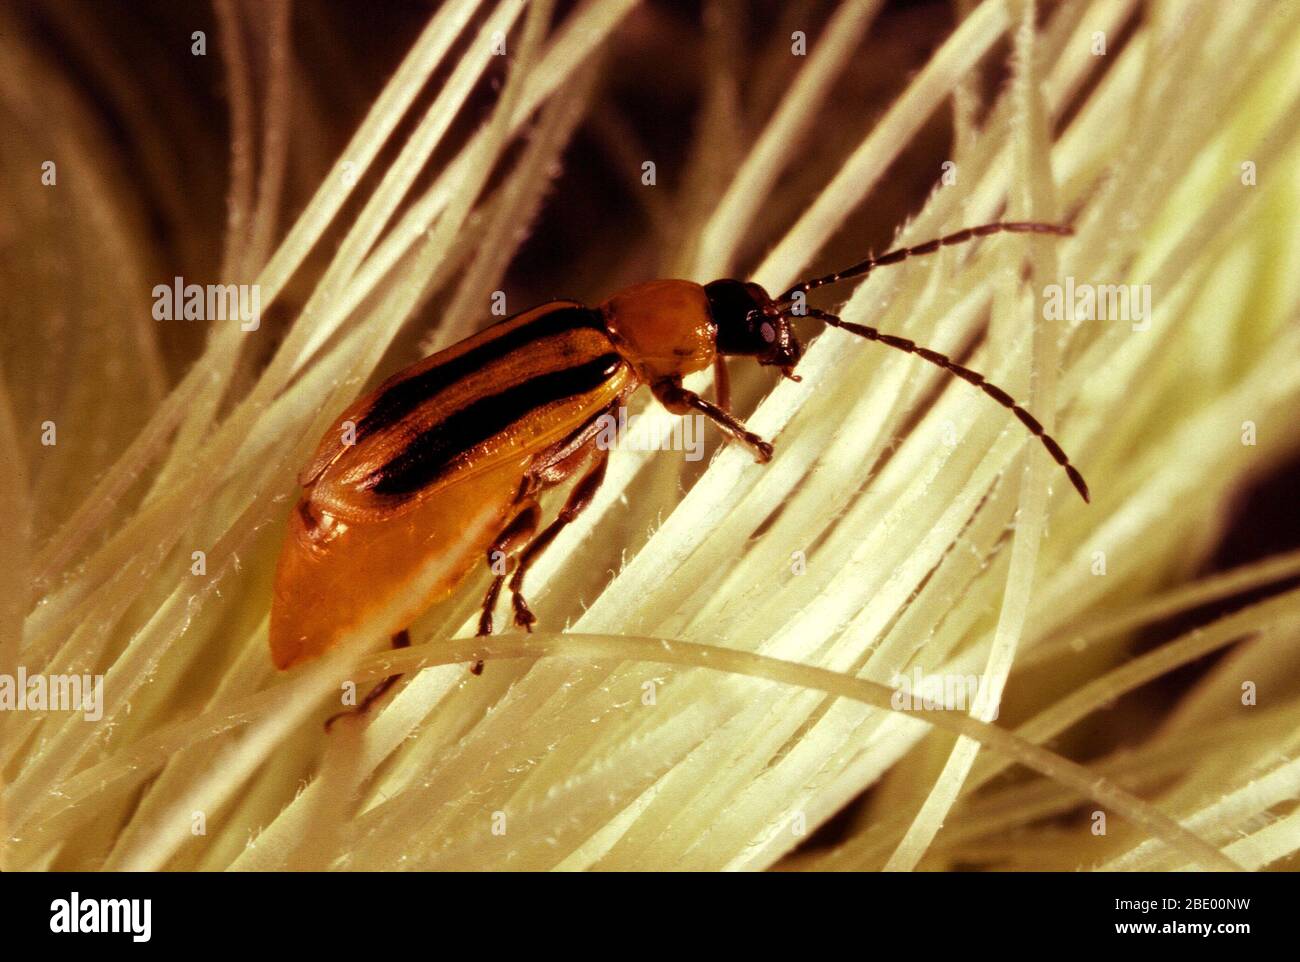 Western corn rootworm beetle Stock Photo